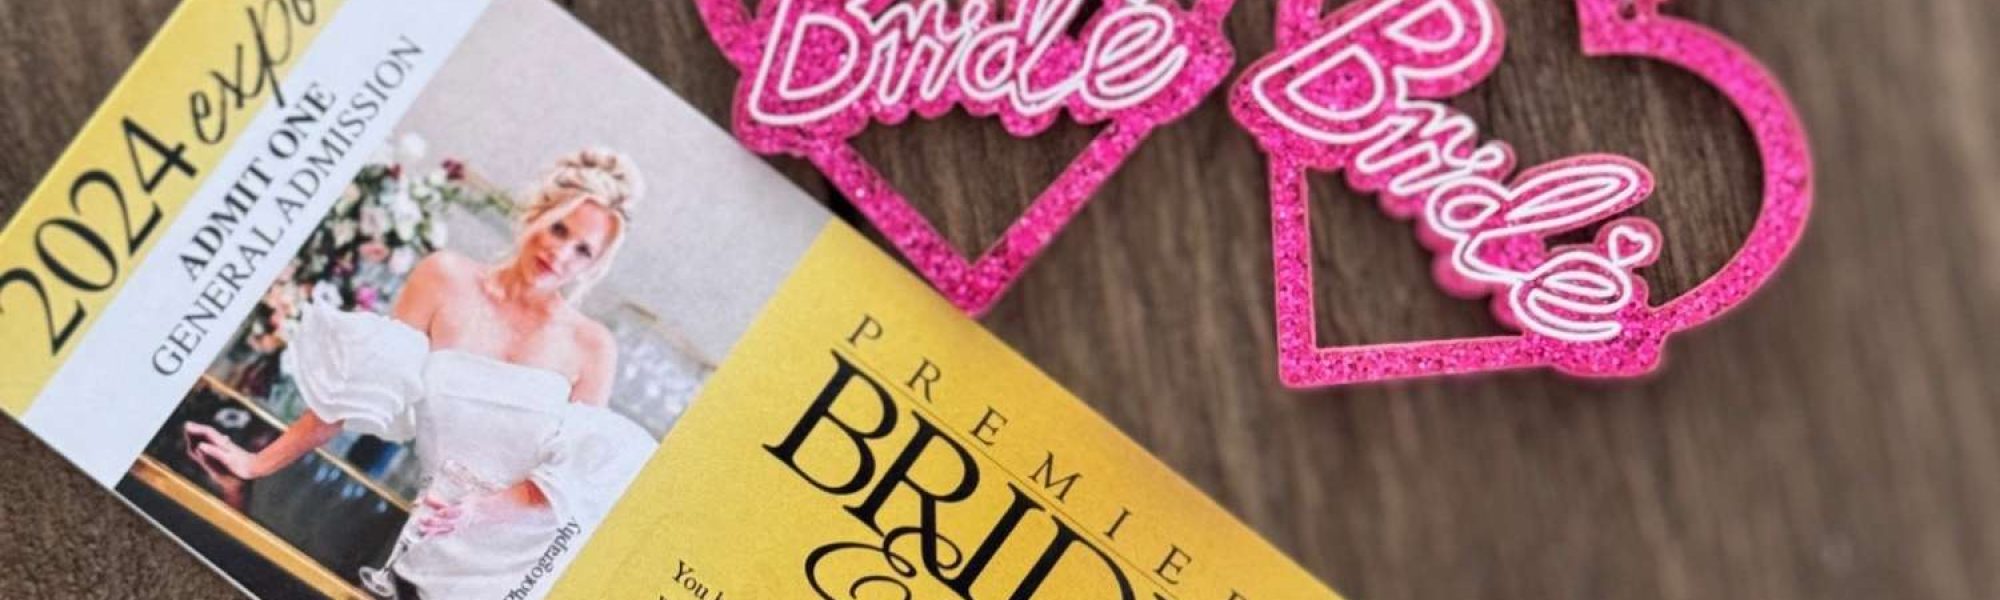 Golden Ticket for the Premier Bride Expo